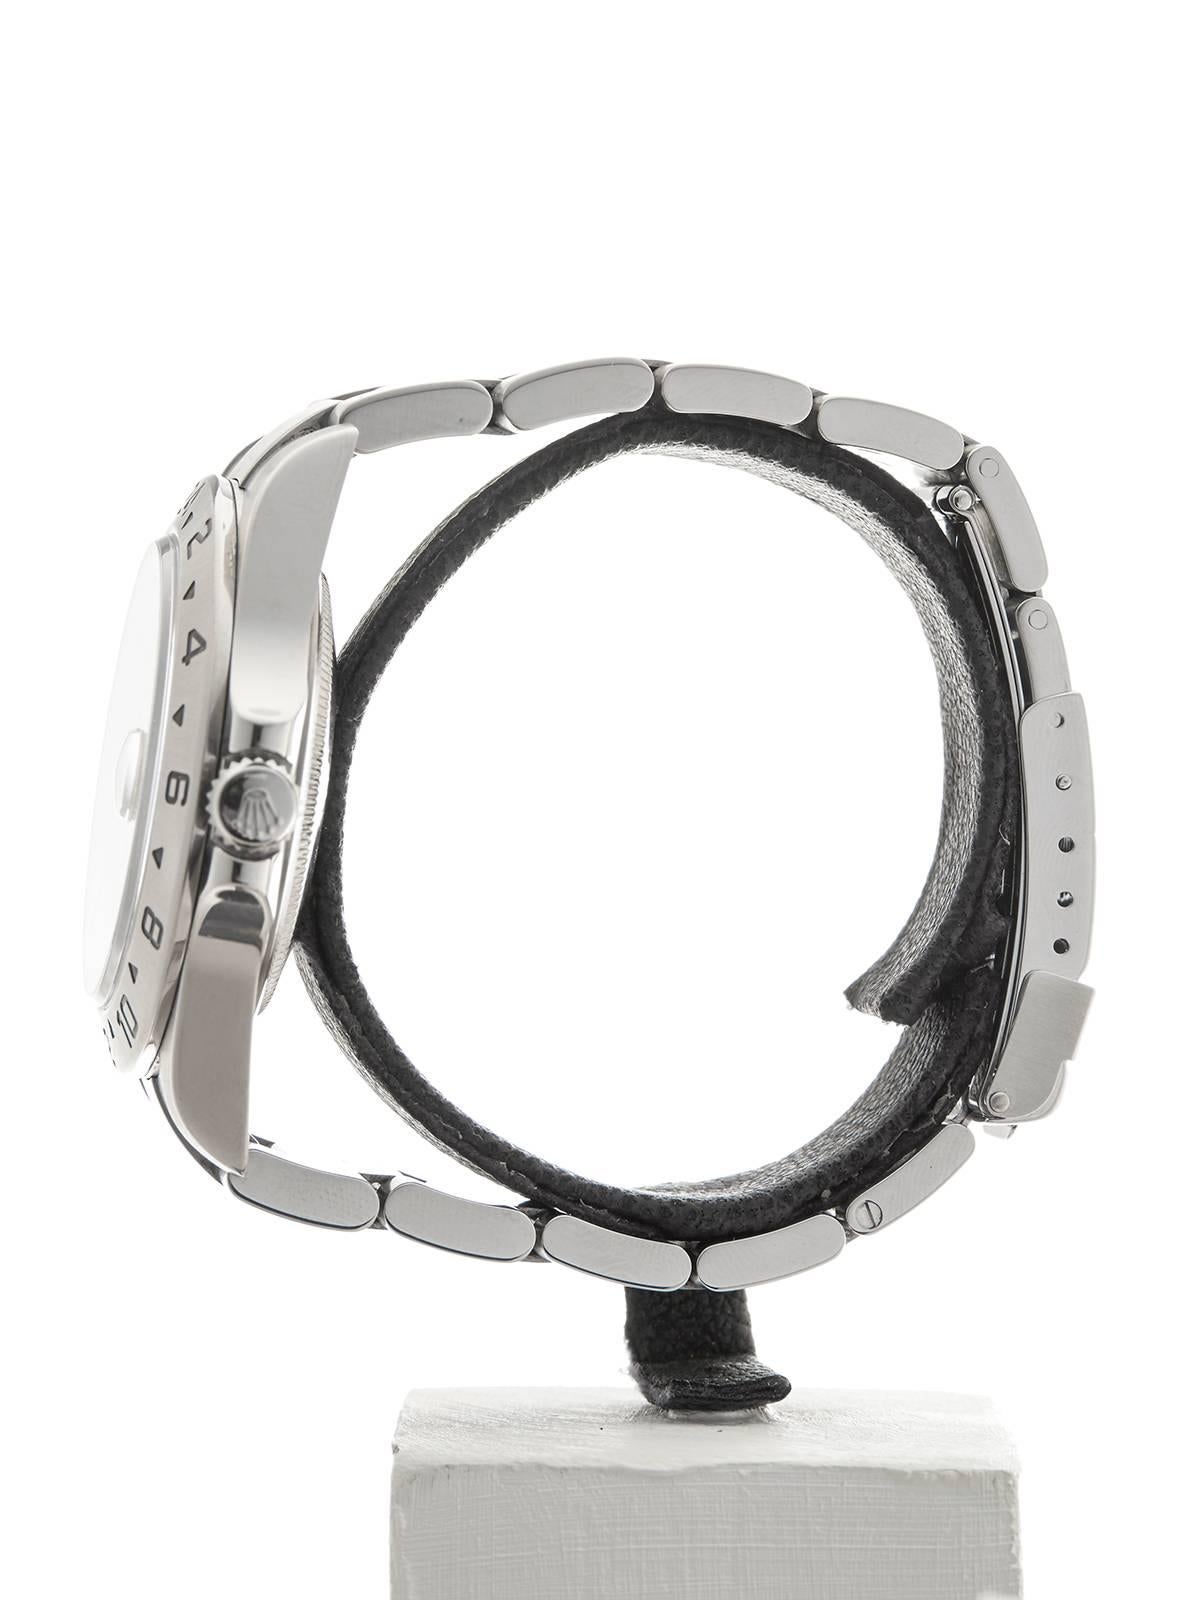 Rolex Stainless Steel Explorer II Polar Automatic Wristwatch 16570 1